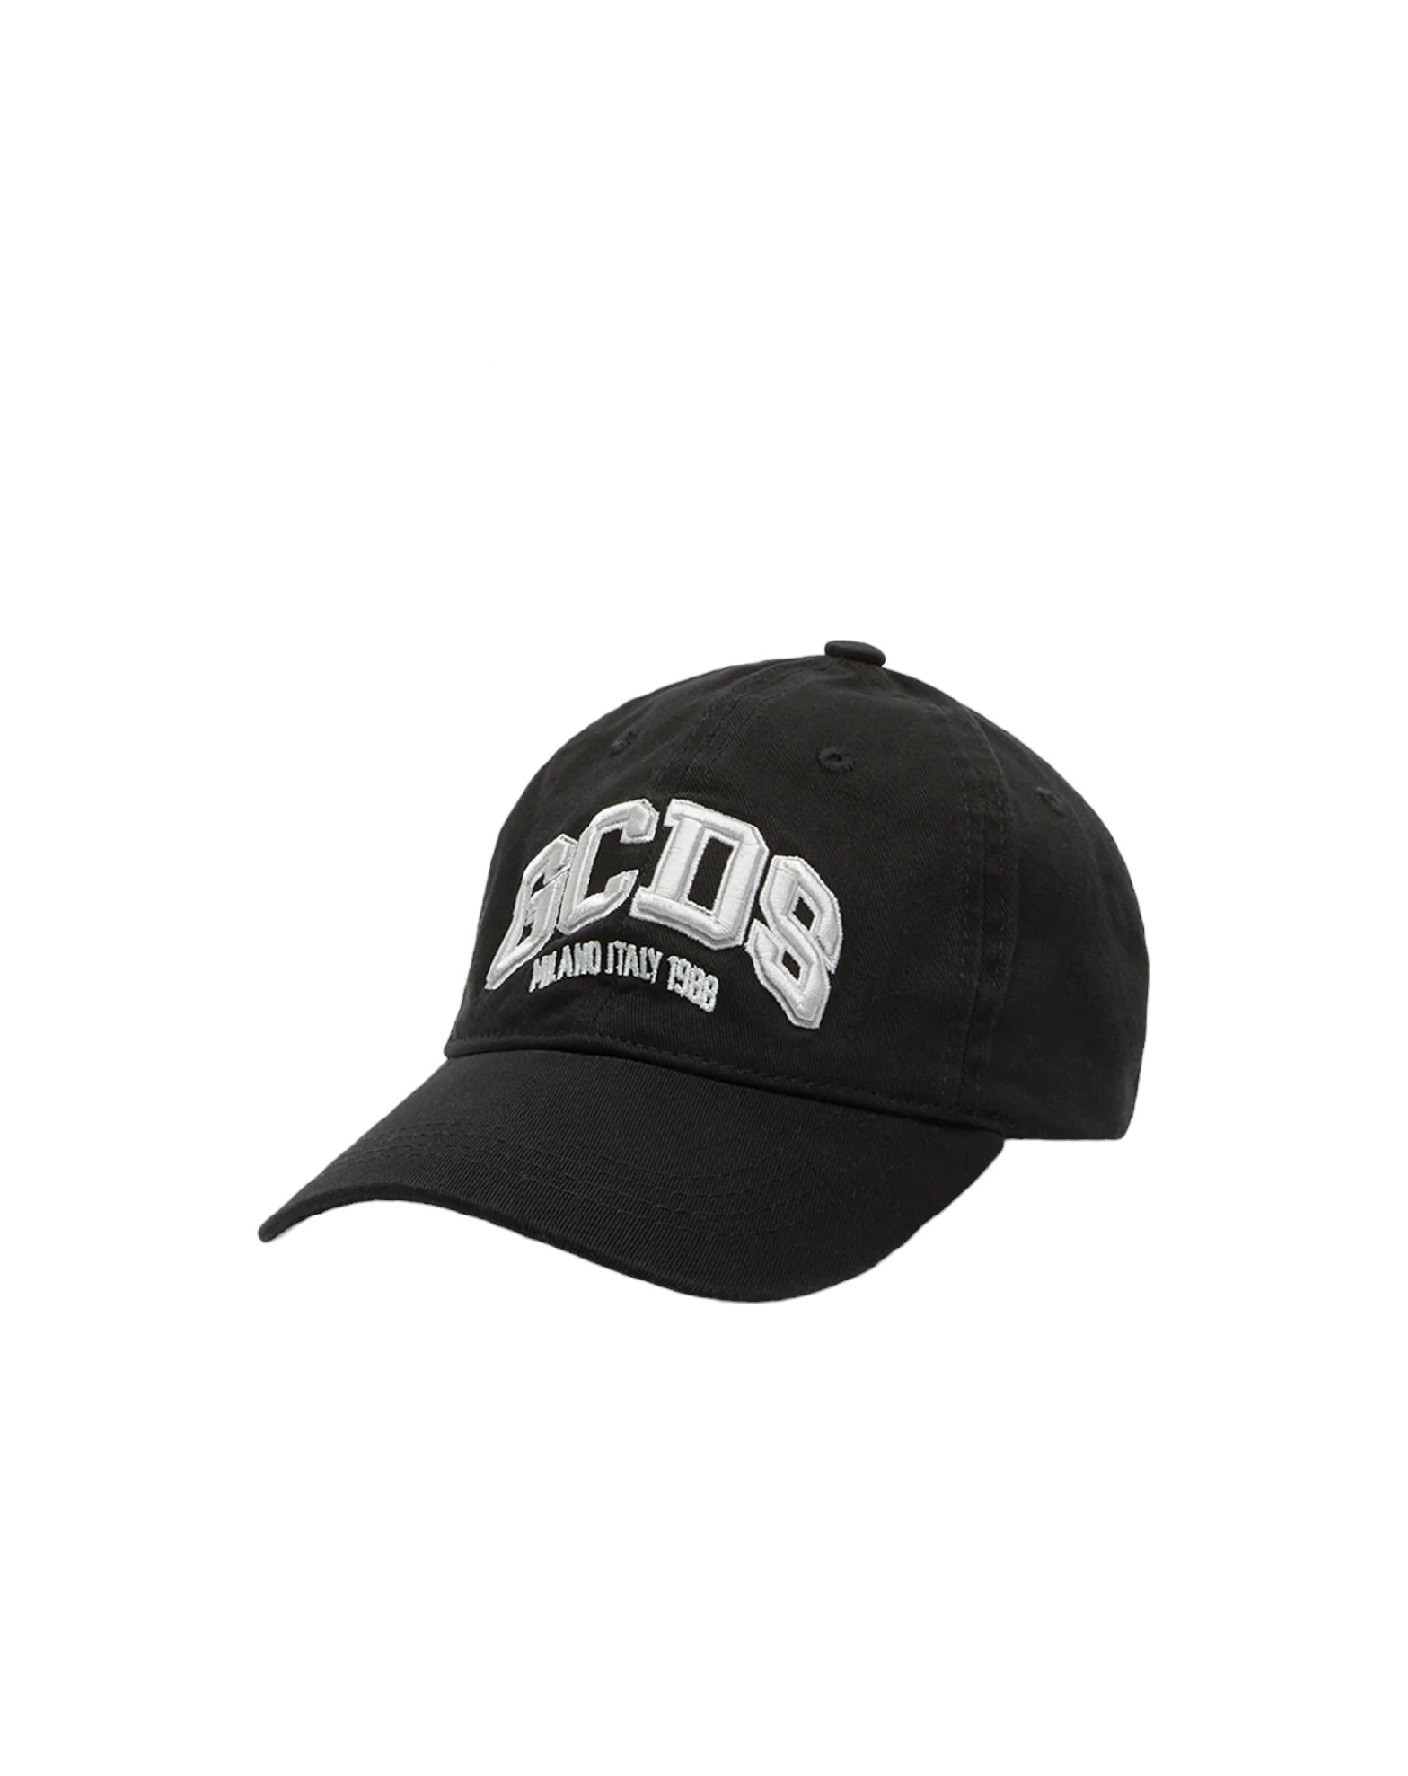 Cappello logo Lounge